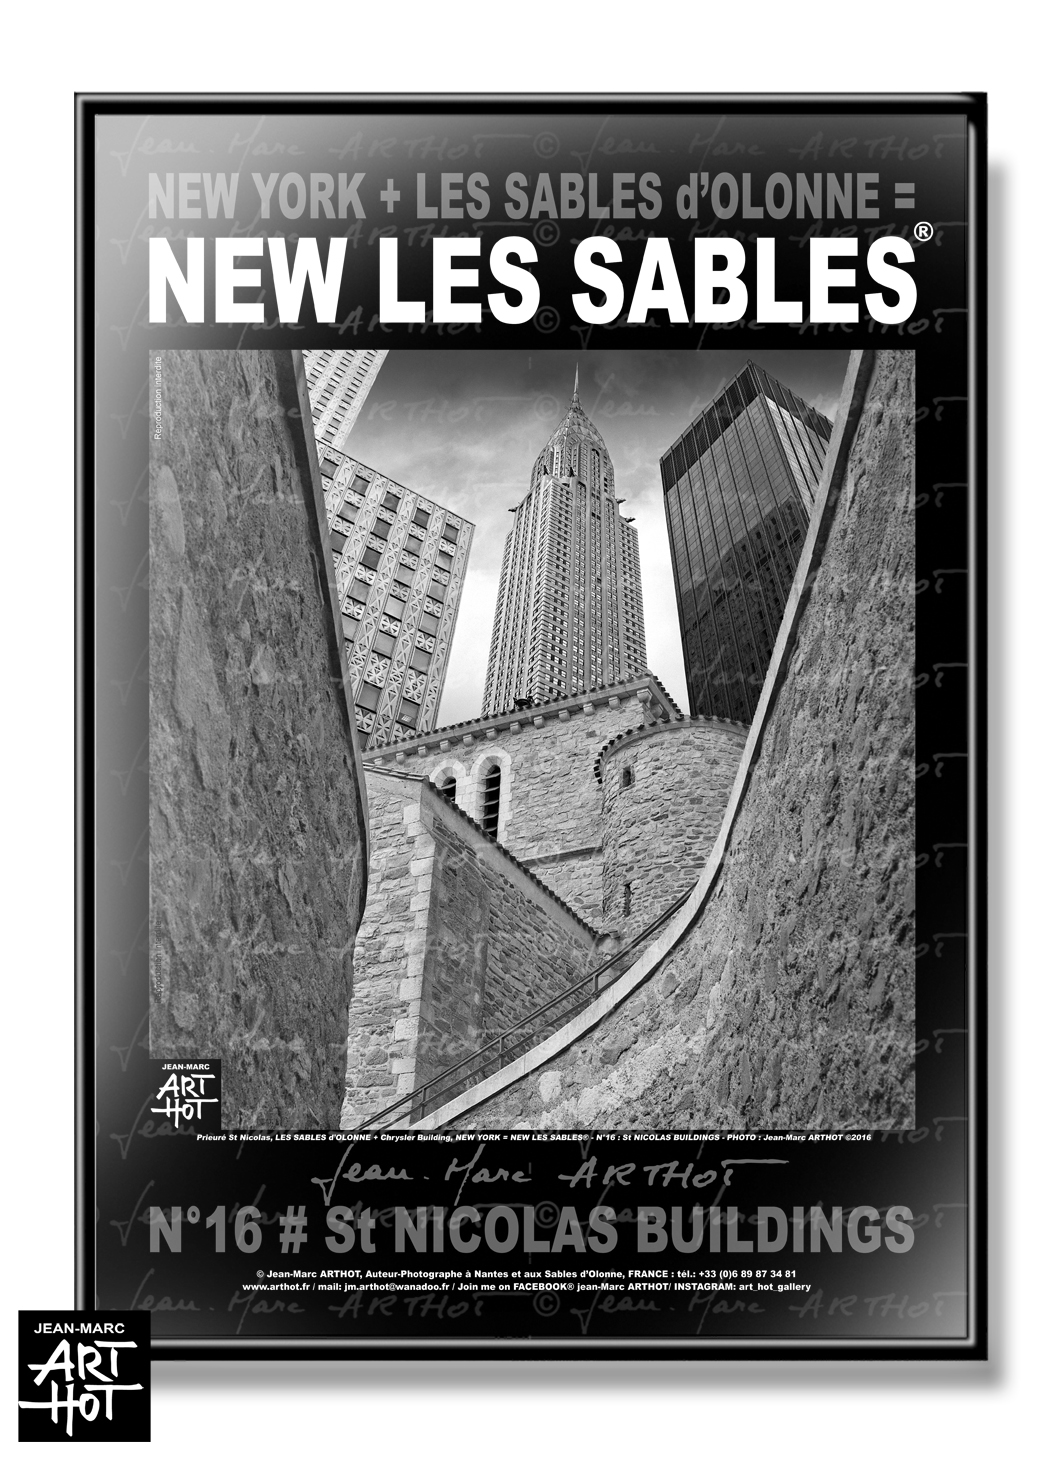 arthot-photo-art-b&w-new-york-vendee-sables-olonne-newlessables-016-prieure-chrysler-AFFICHE